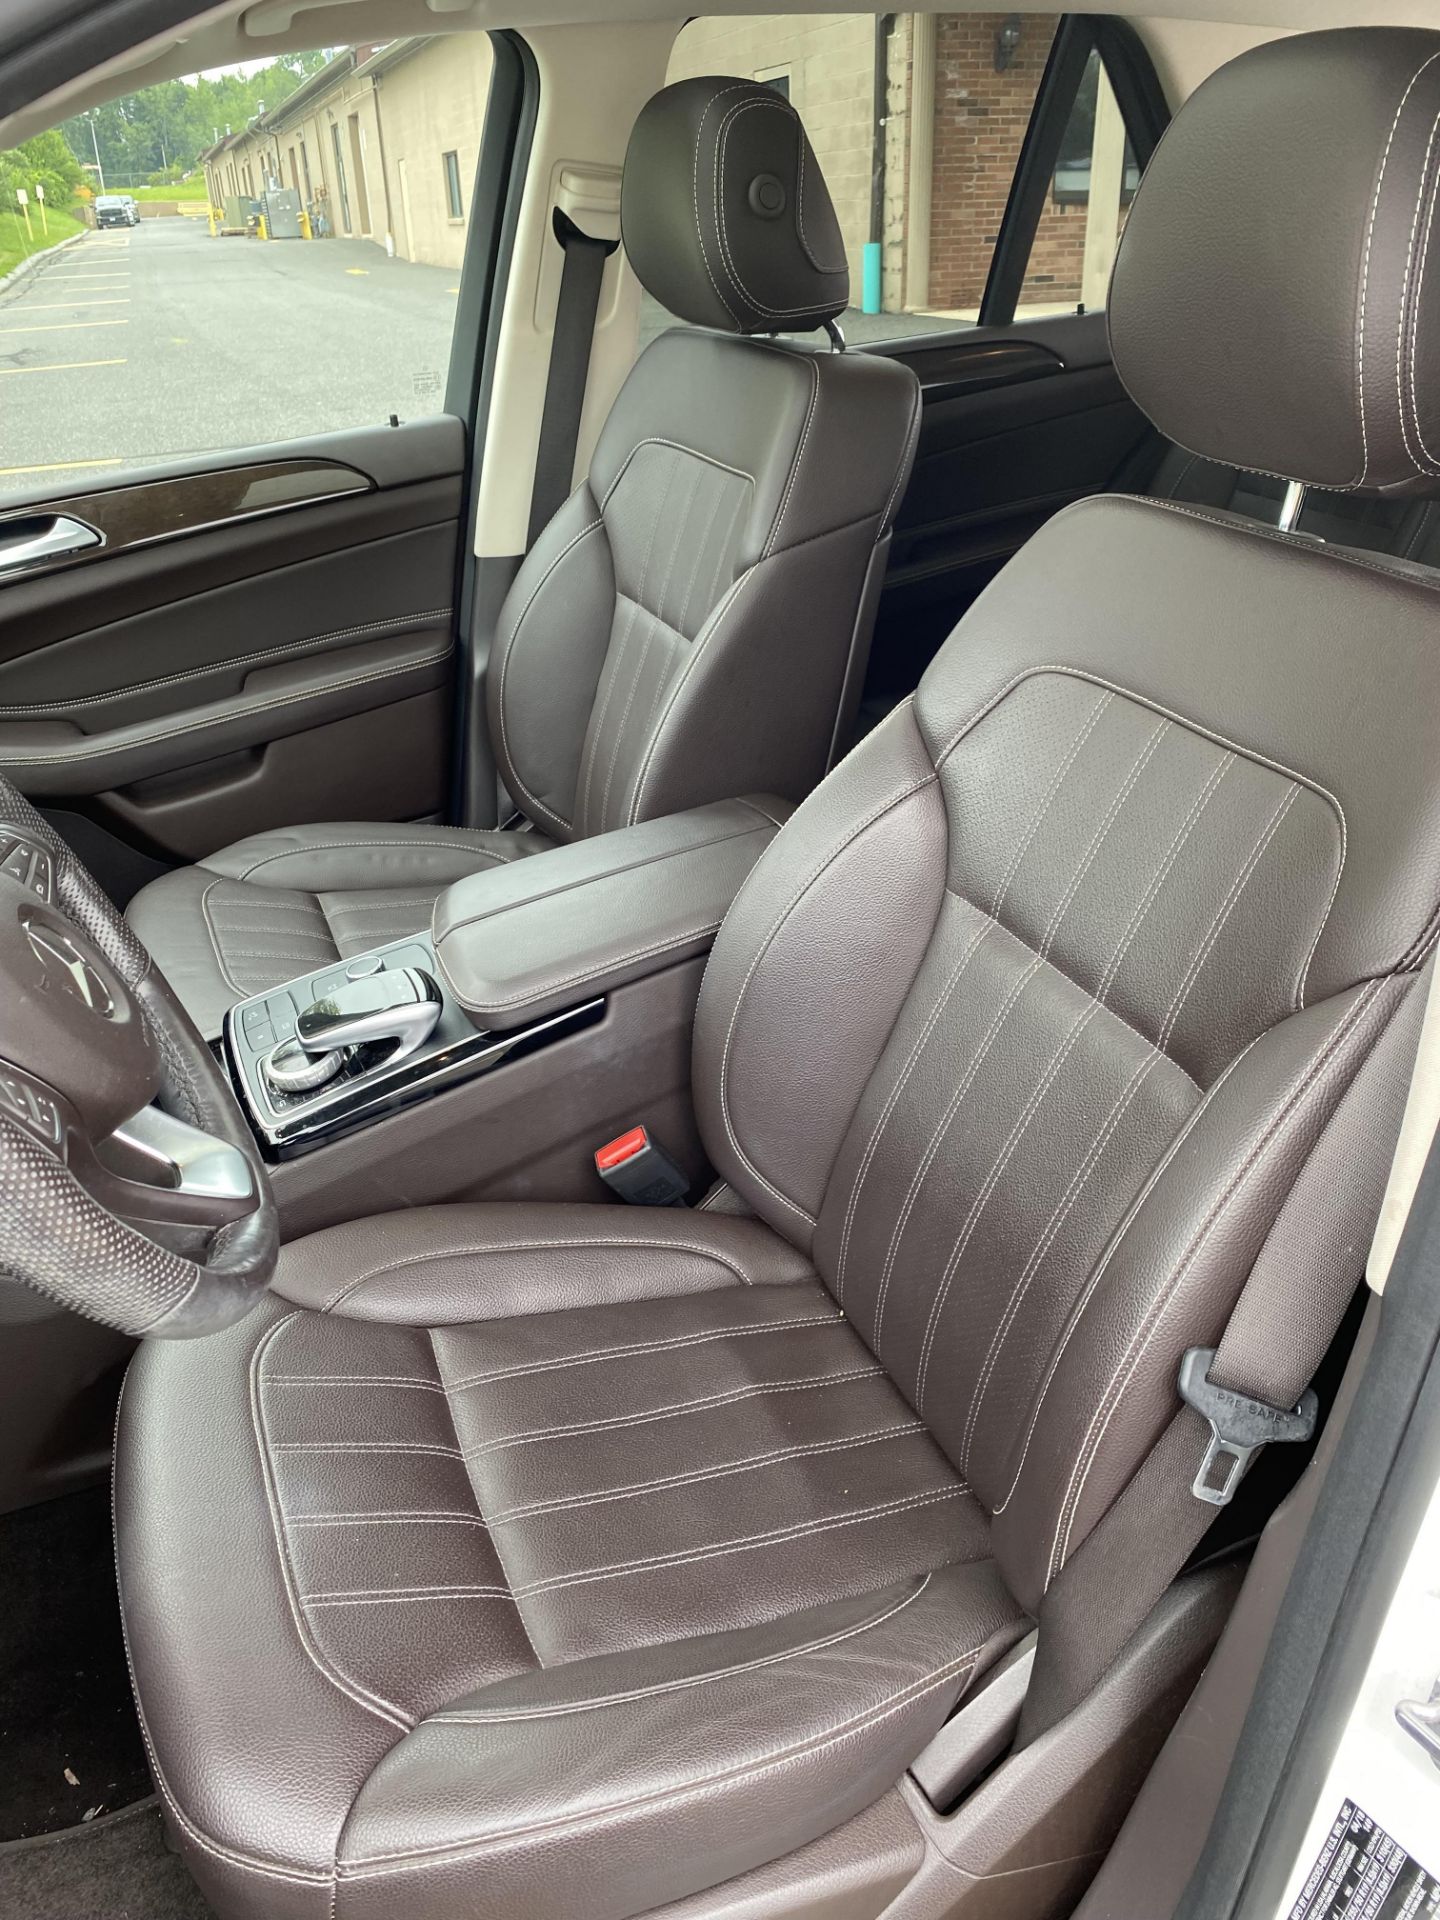 2018 Mercedes Benz GLE350, Odom: 52,420, VIN#: 4JGDA5HBXJB144786, Leather Interior, Power - Image 14 of 19